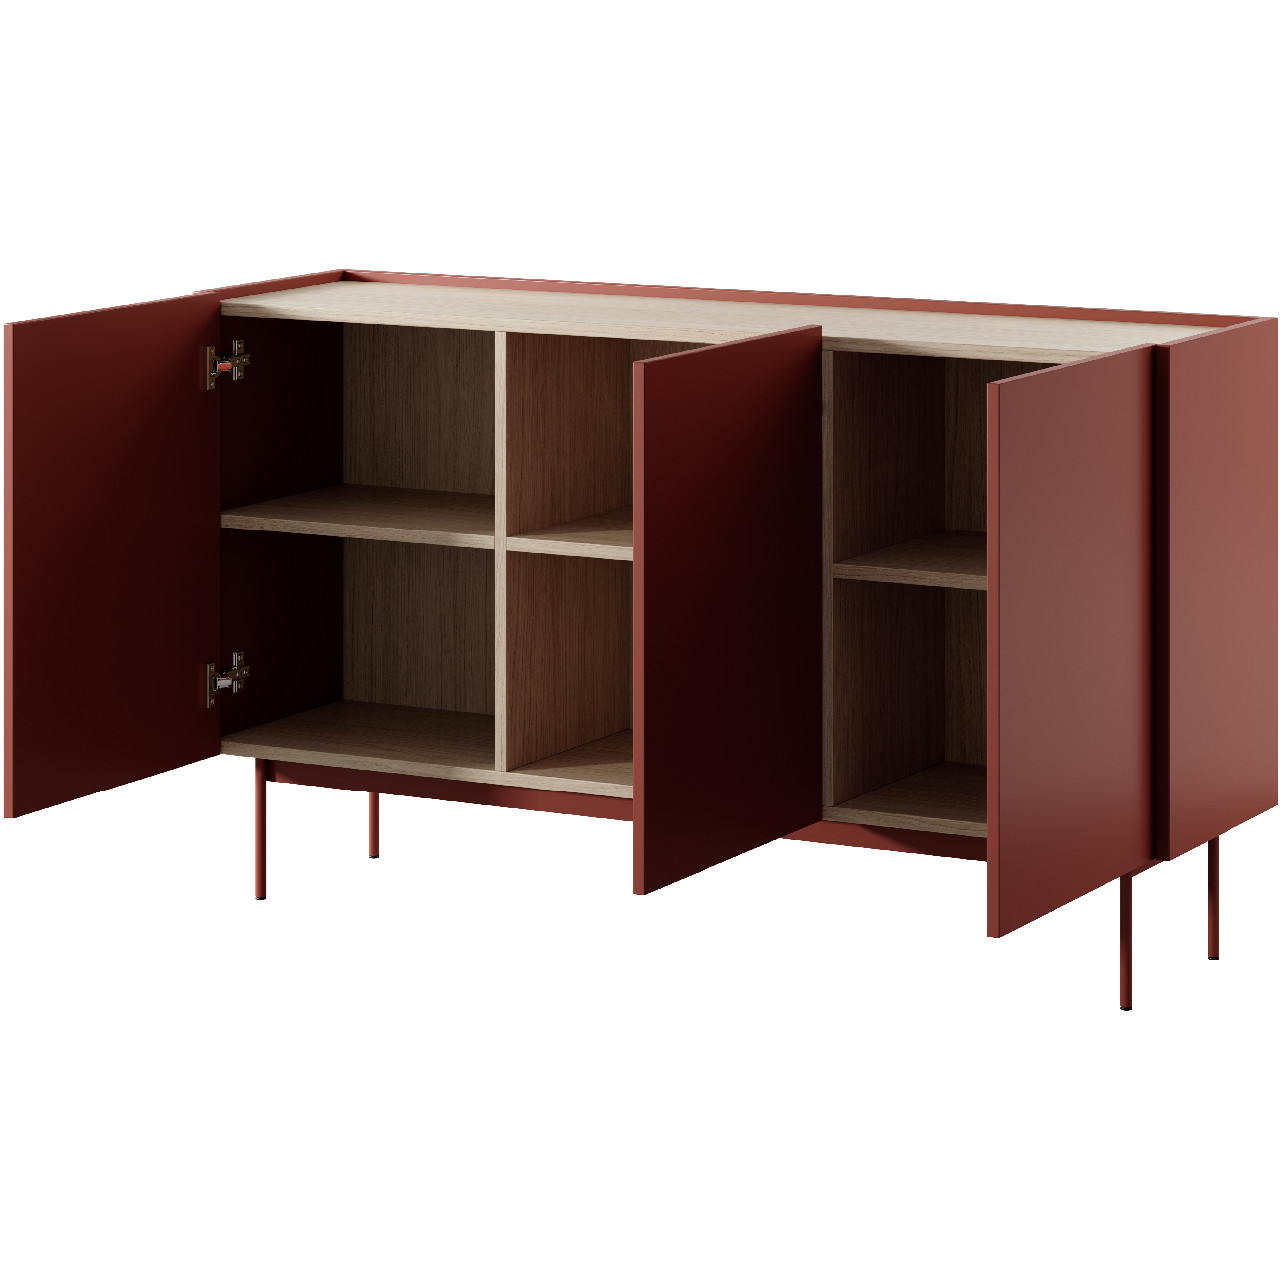 Storage cabinet COLOUR 02 ceramic red / linea oak